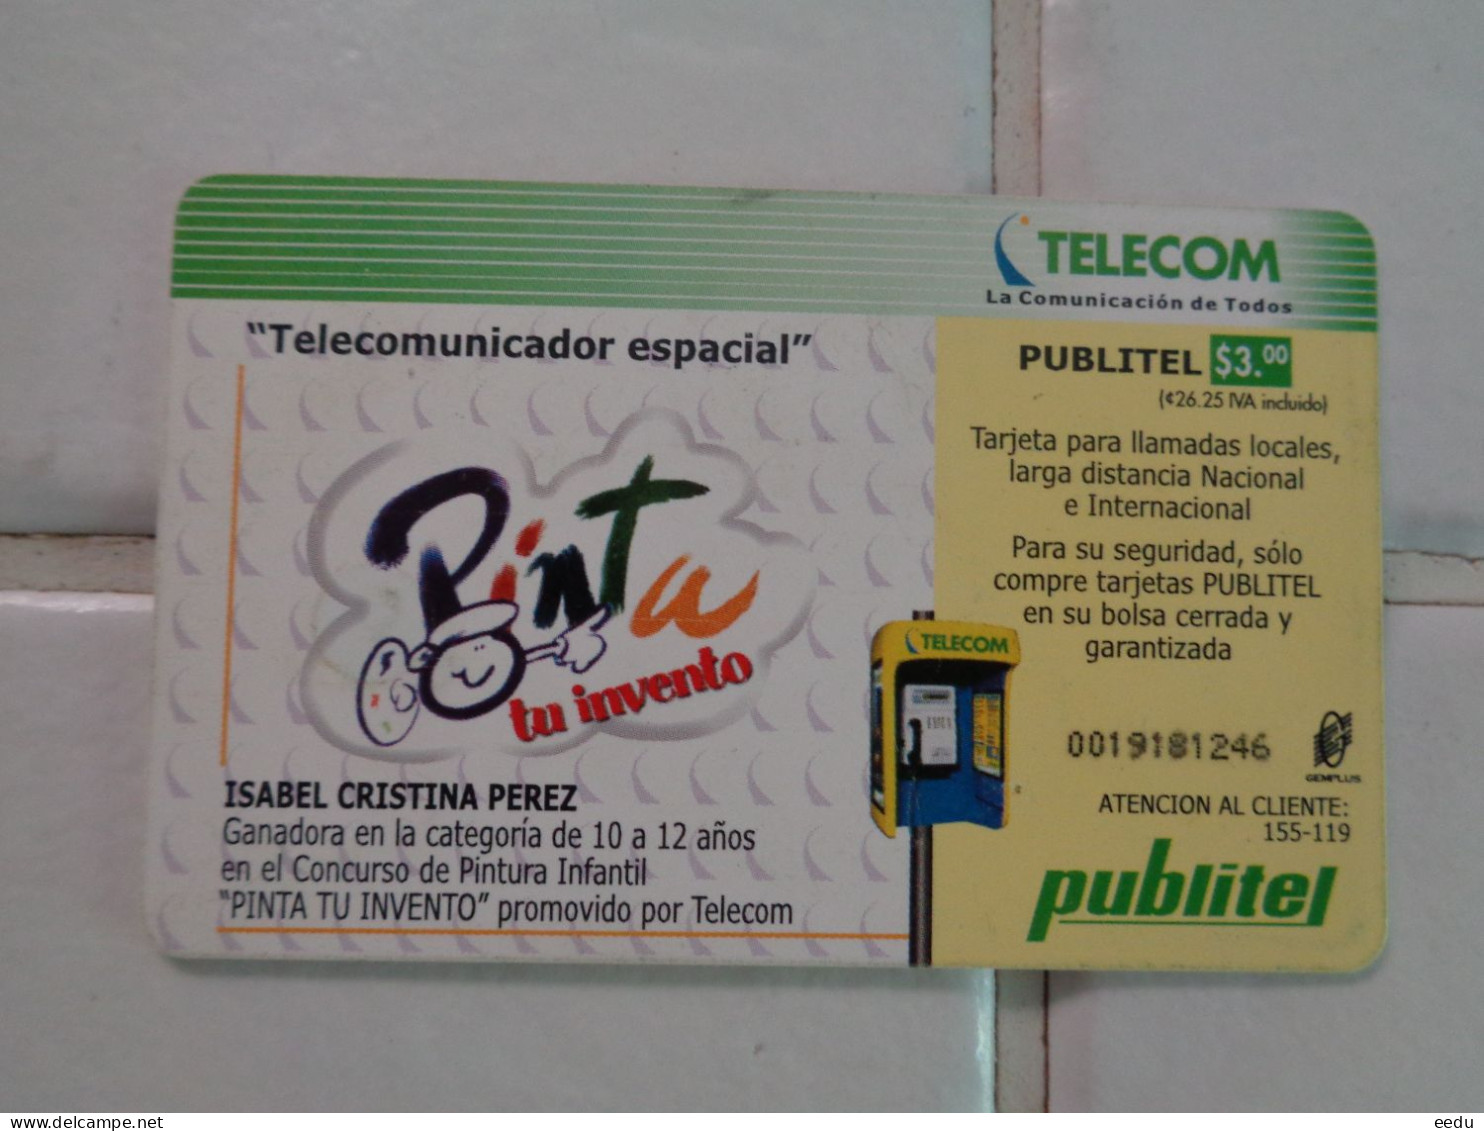 El Salvador Phonecard - Salvador